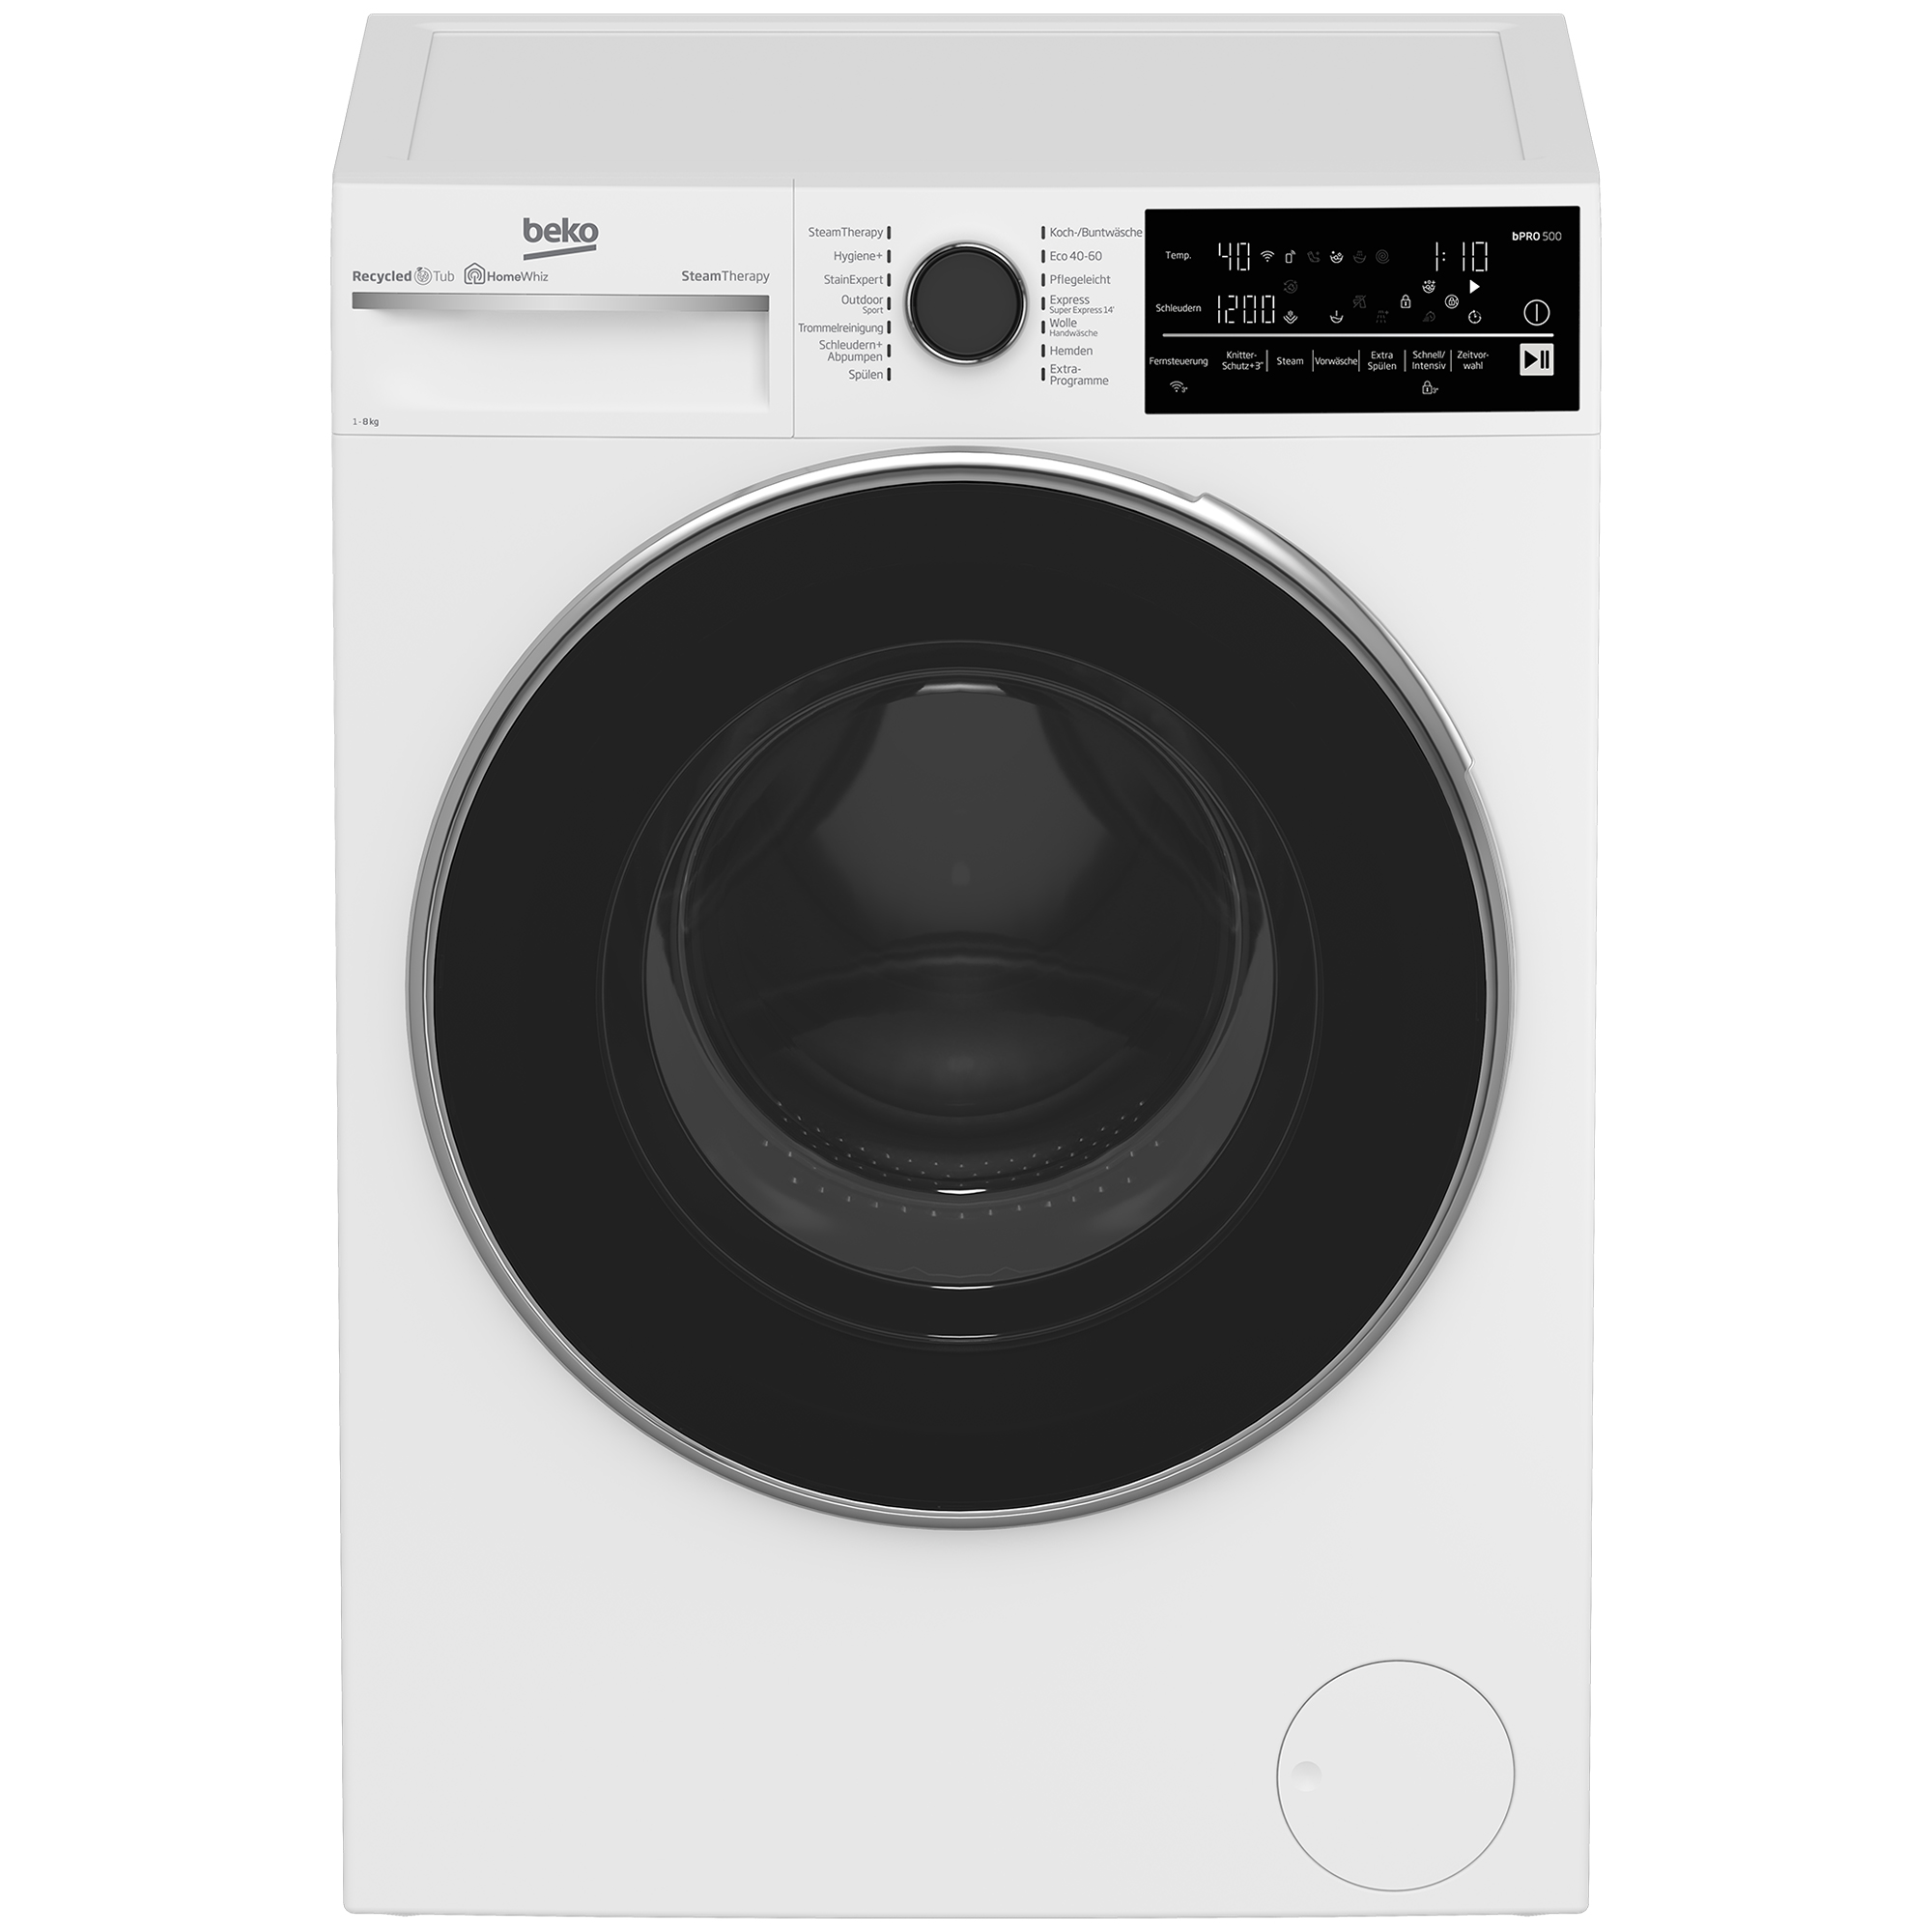 kg, B5WFT78410W Waschmaschine (8 BEKO A)